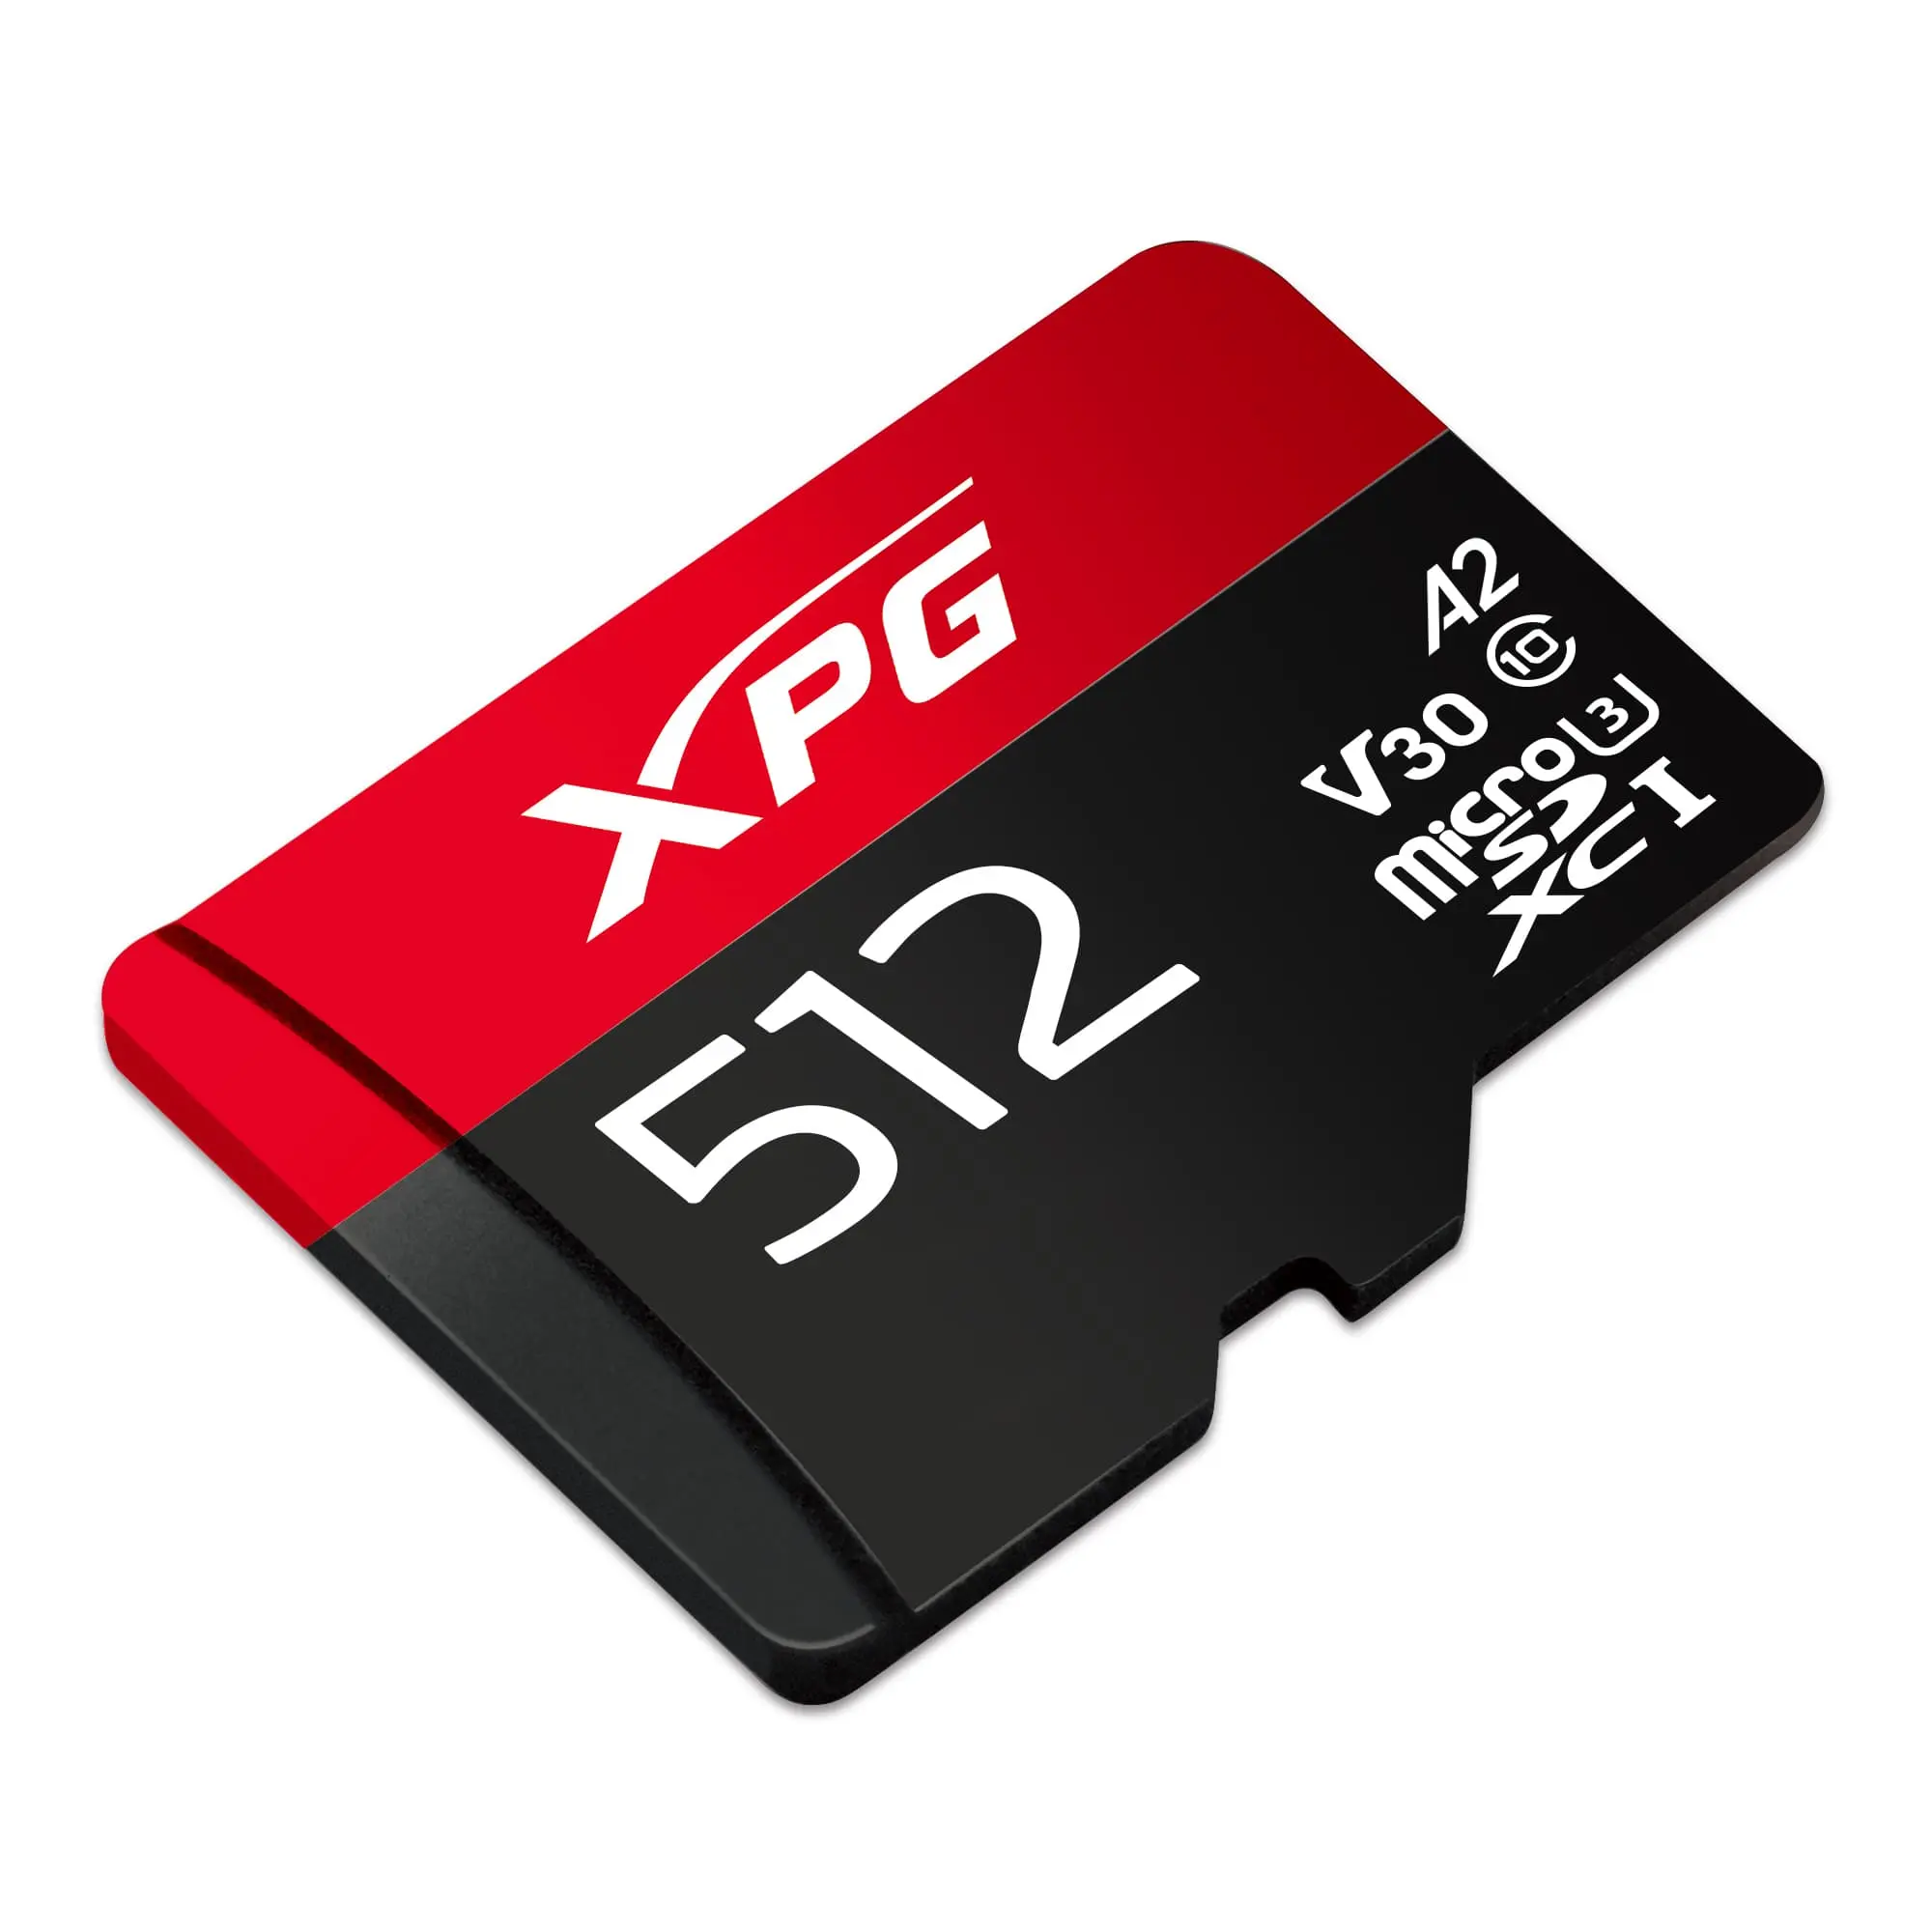 ADATA lanza las tarjetas XPG microSDXC UHS-I U3 Clase 10